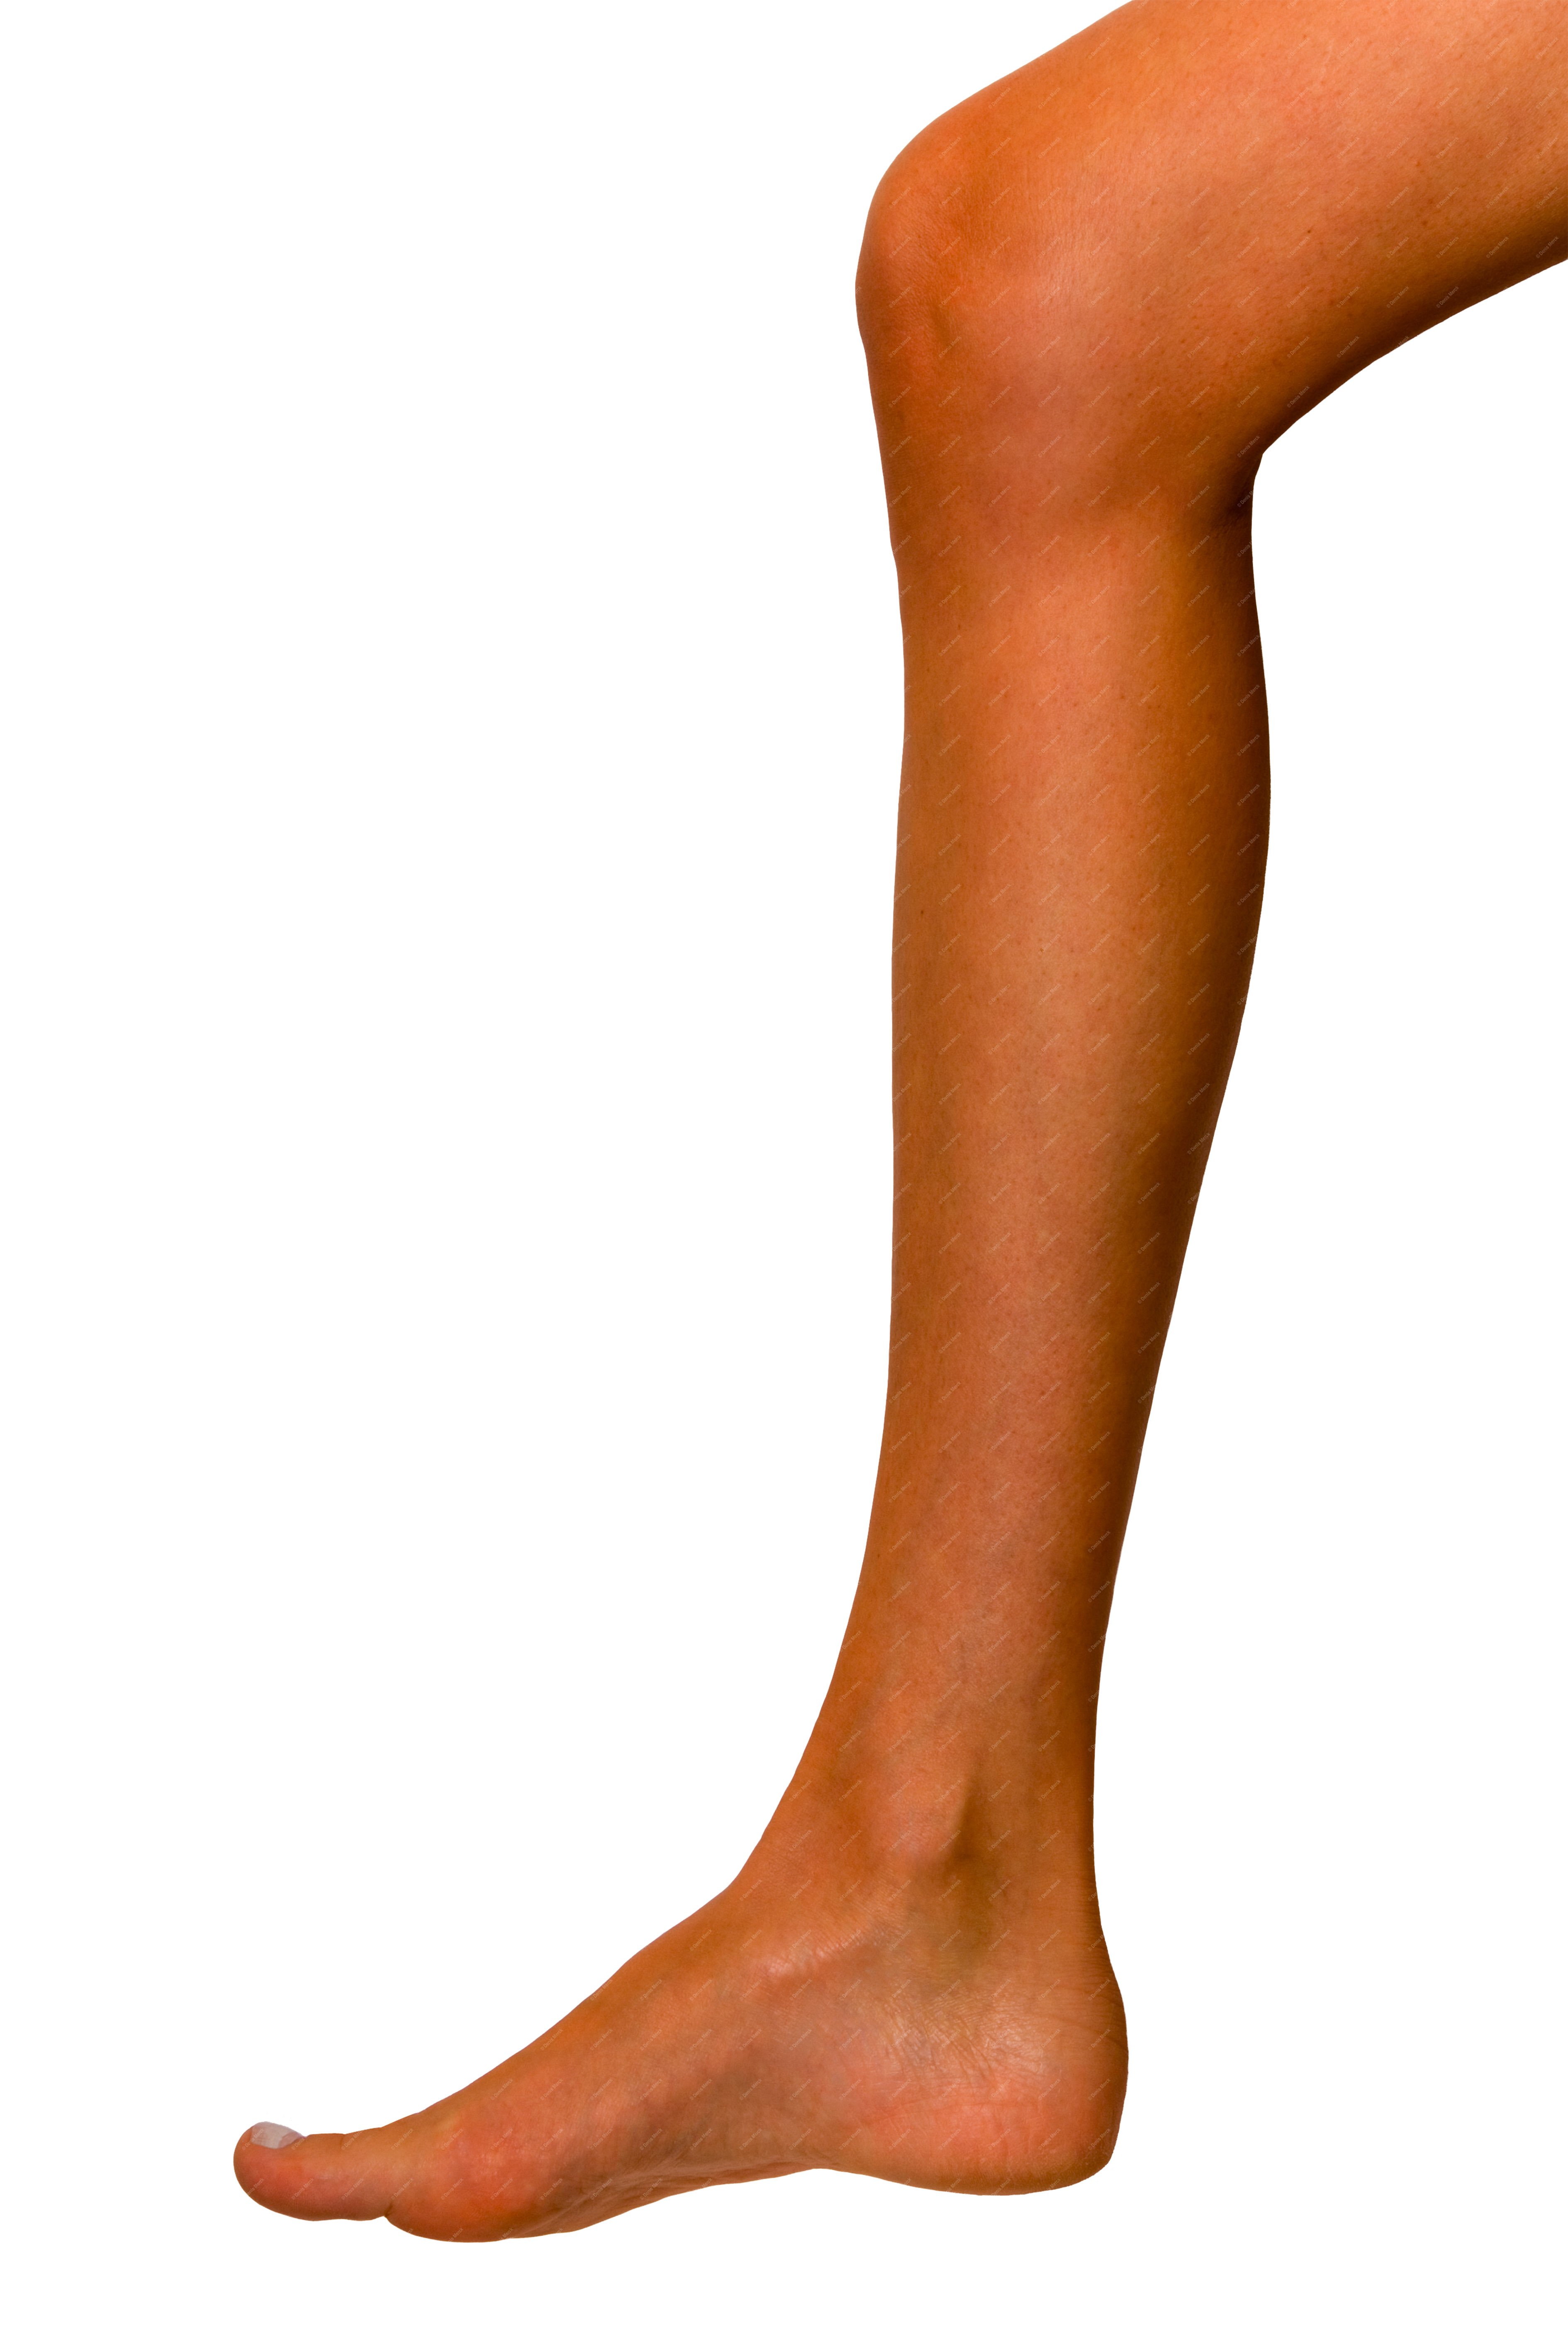 jambe dune jeune femme détourée denis merck photographe